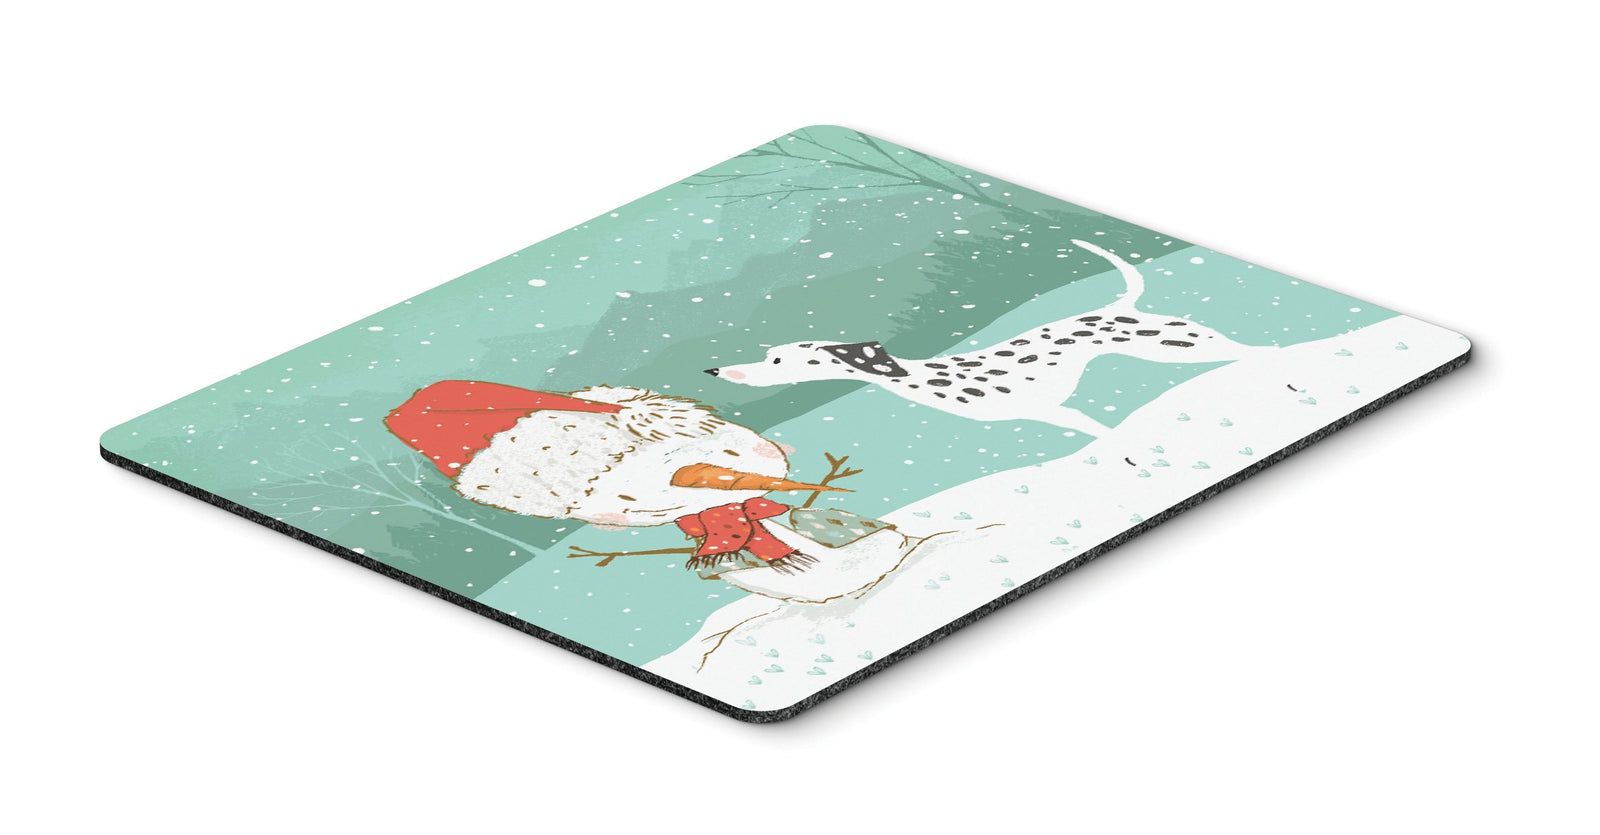 Dalmatian and Snowman Christmas Mouse Pad, Hot Pad or Trivet CK2037MP by Caroline's Treasures